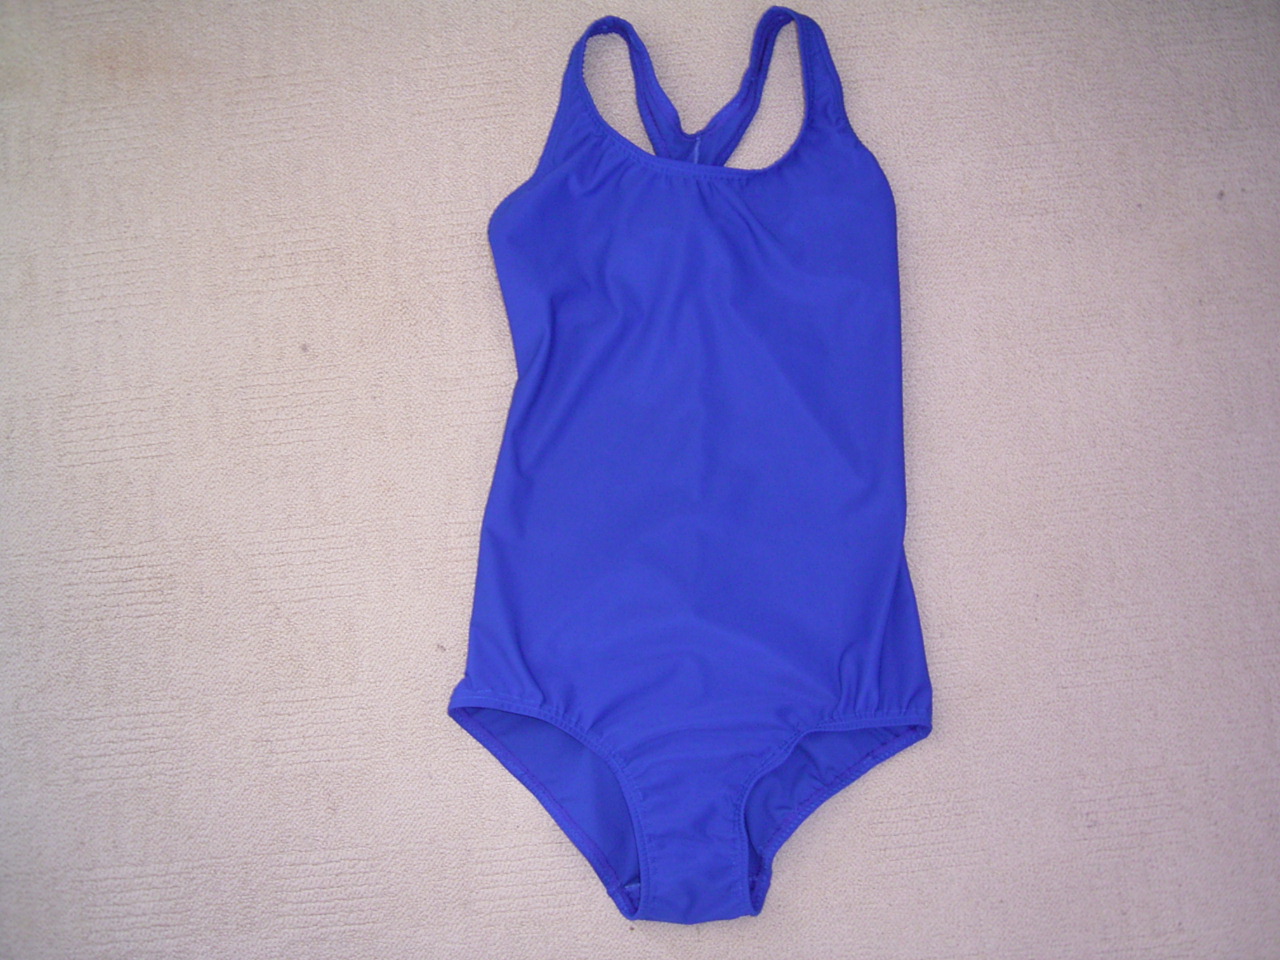 Kwik Sew Misses Swimsuit 2962 pattern review by Karen8320